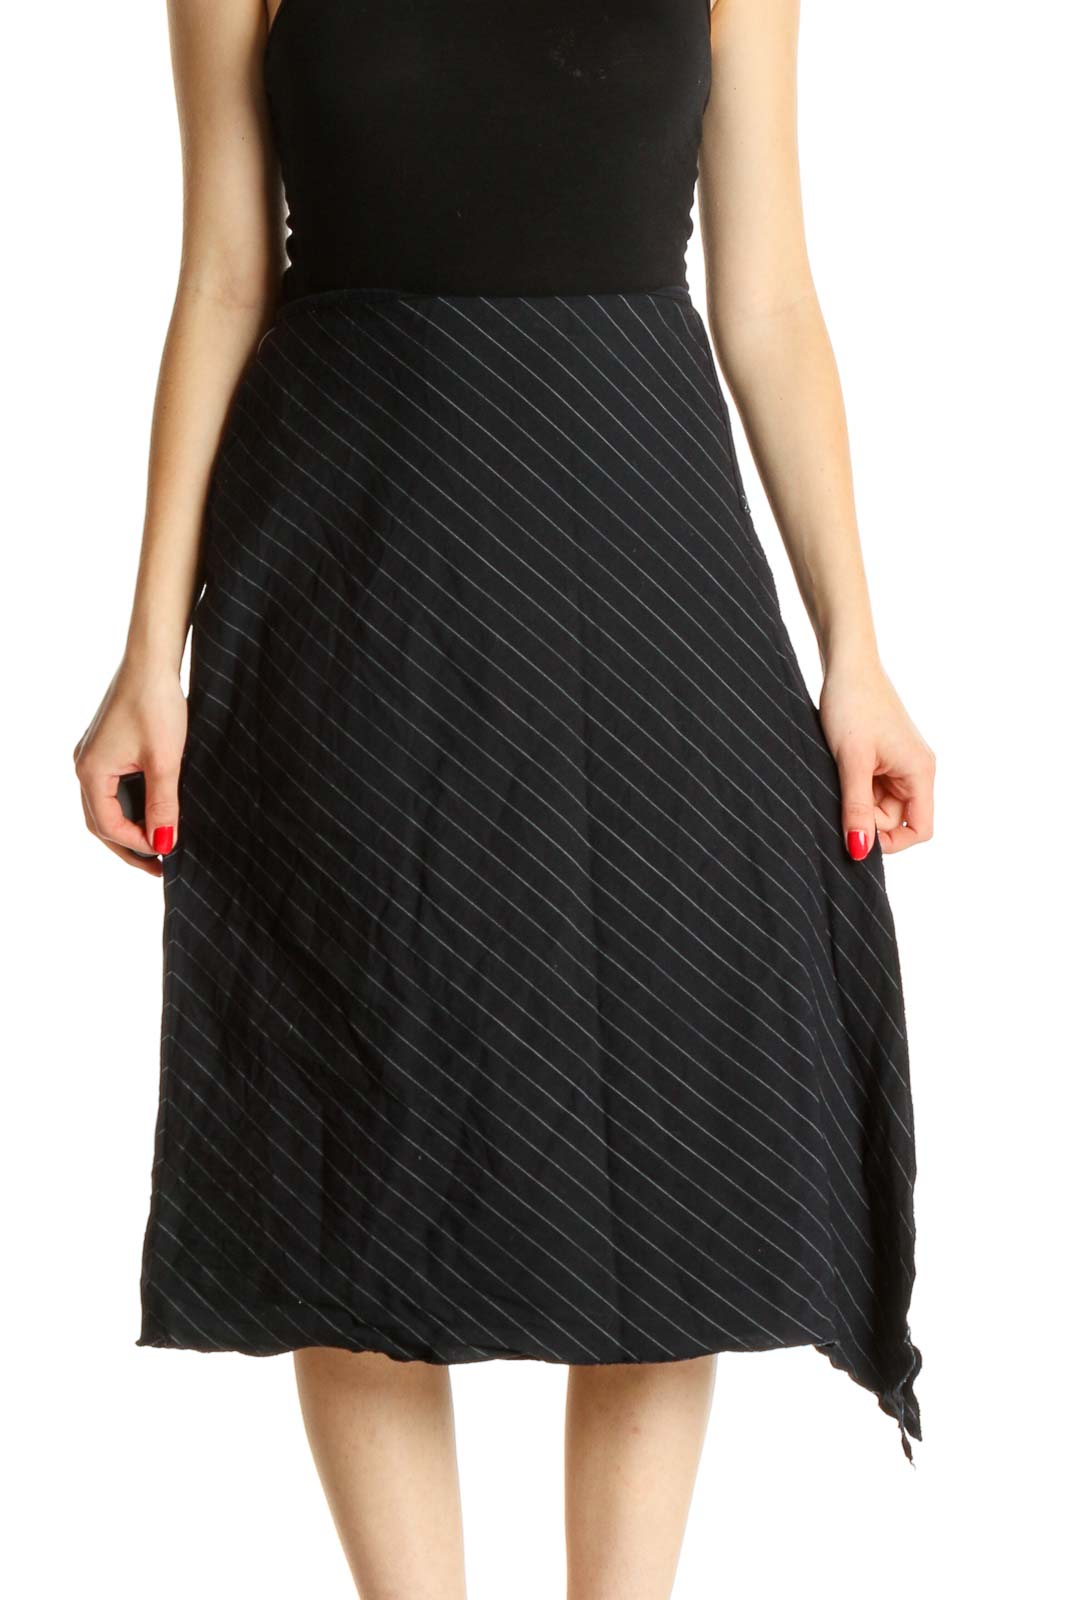 Blue Striped Retro A-Line Skirt Front